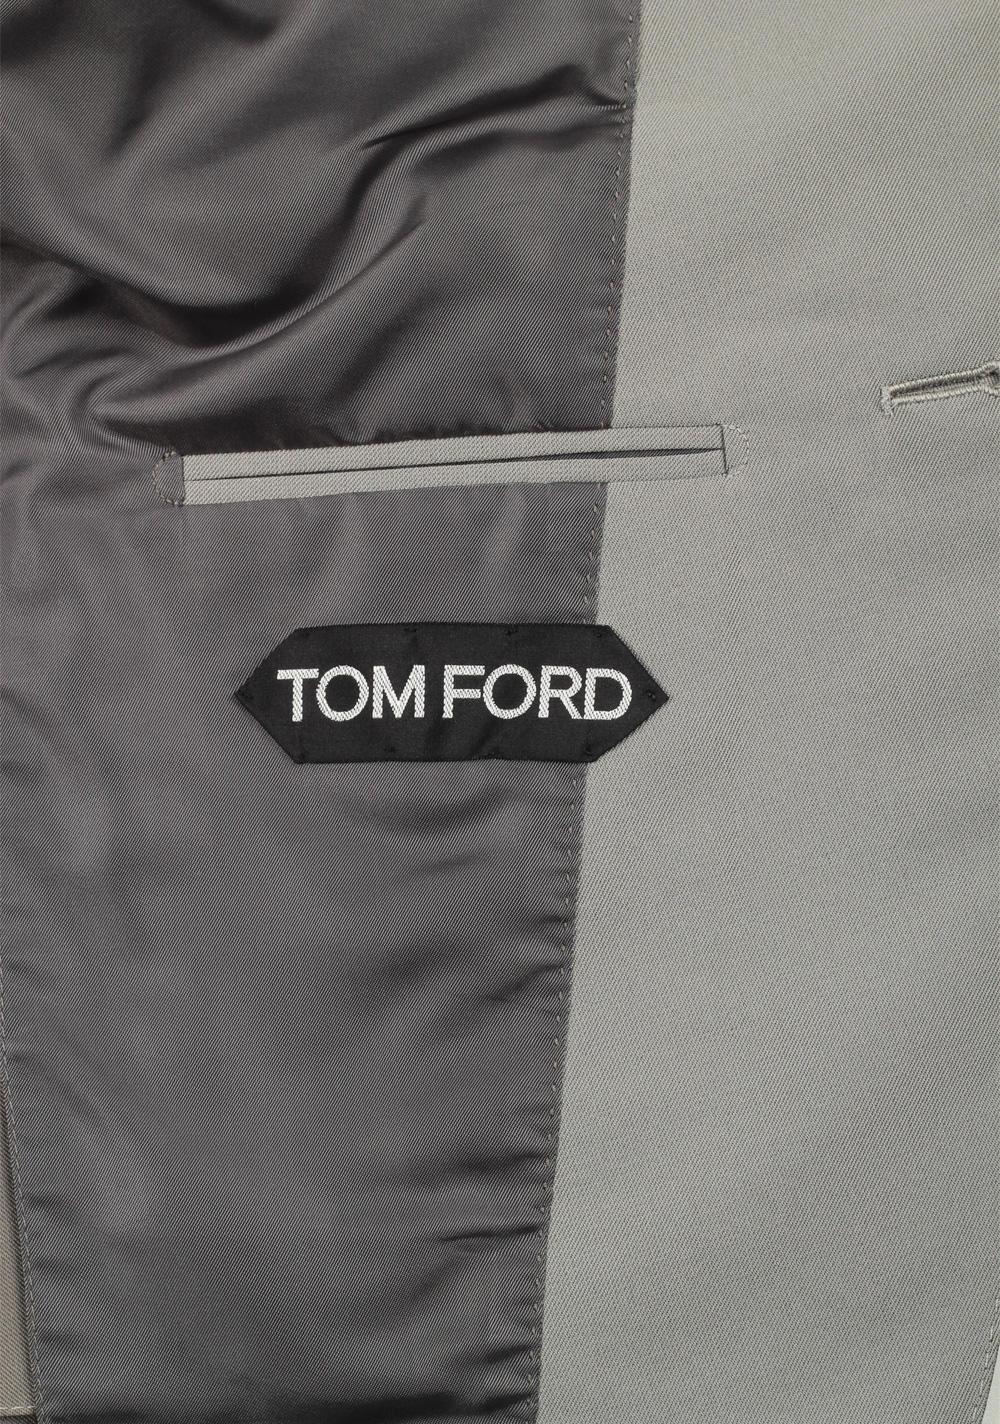 TOM FORD Atticus Silver Sport Coat Size 46 / 36R U.S. | Costume Limité